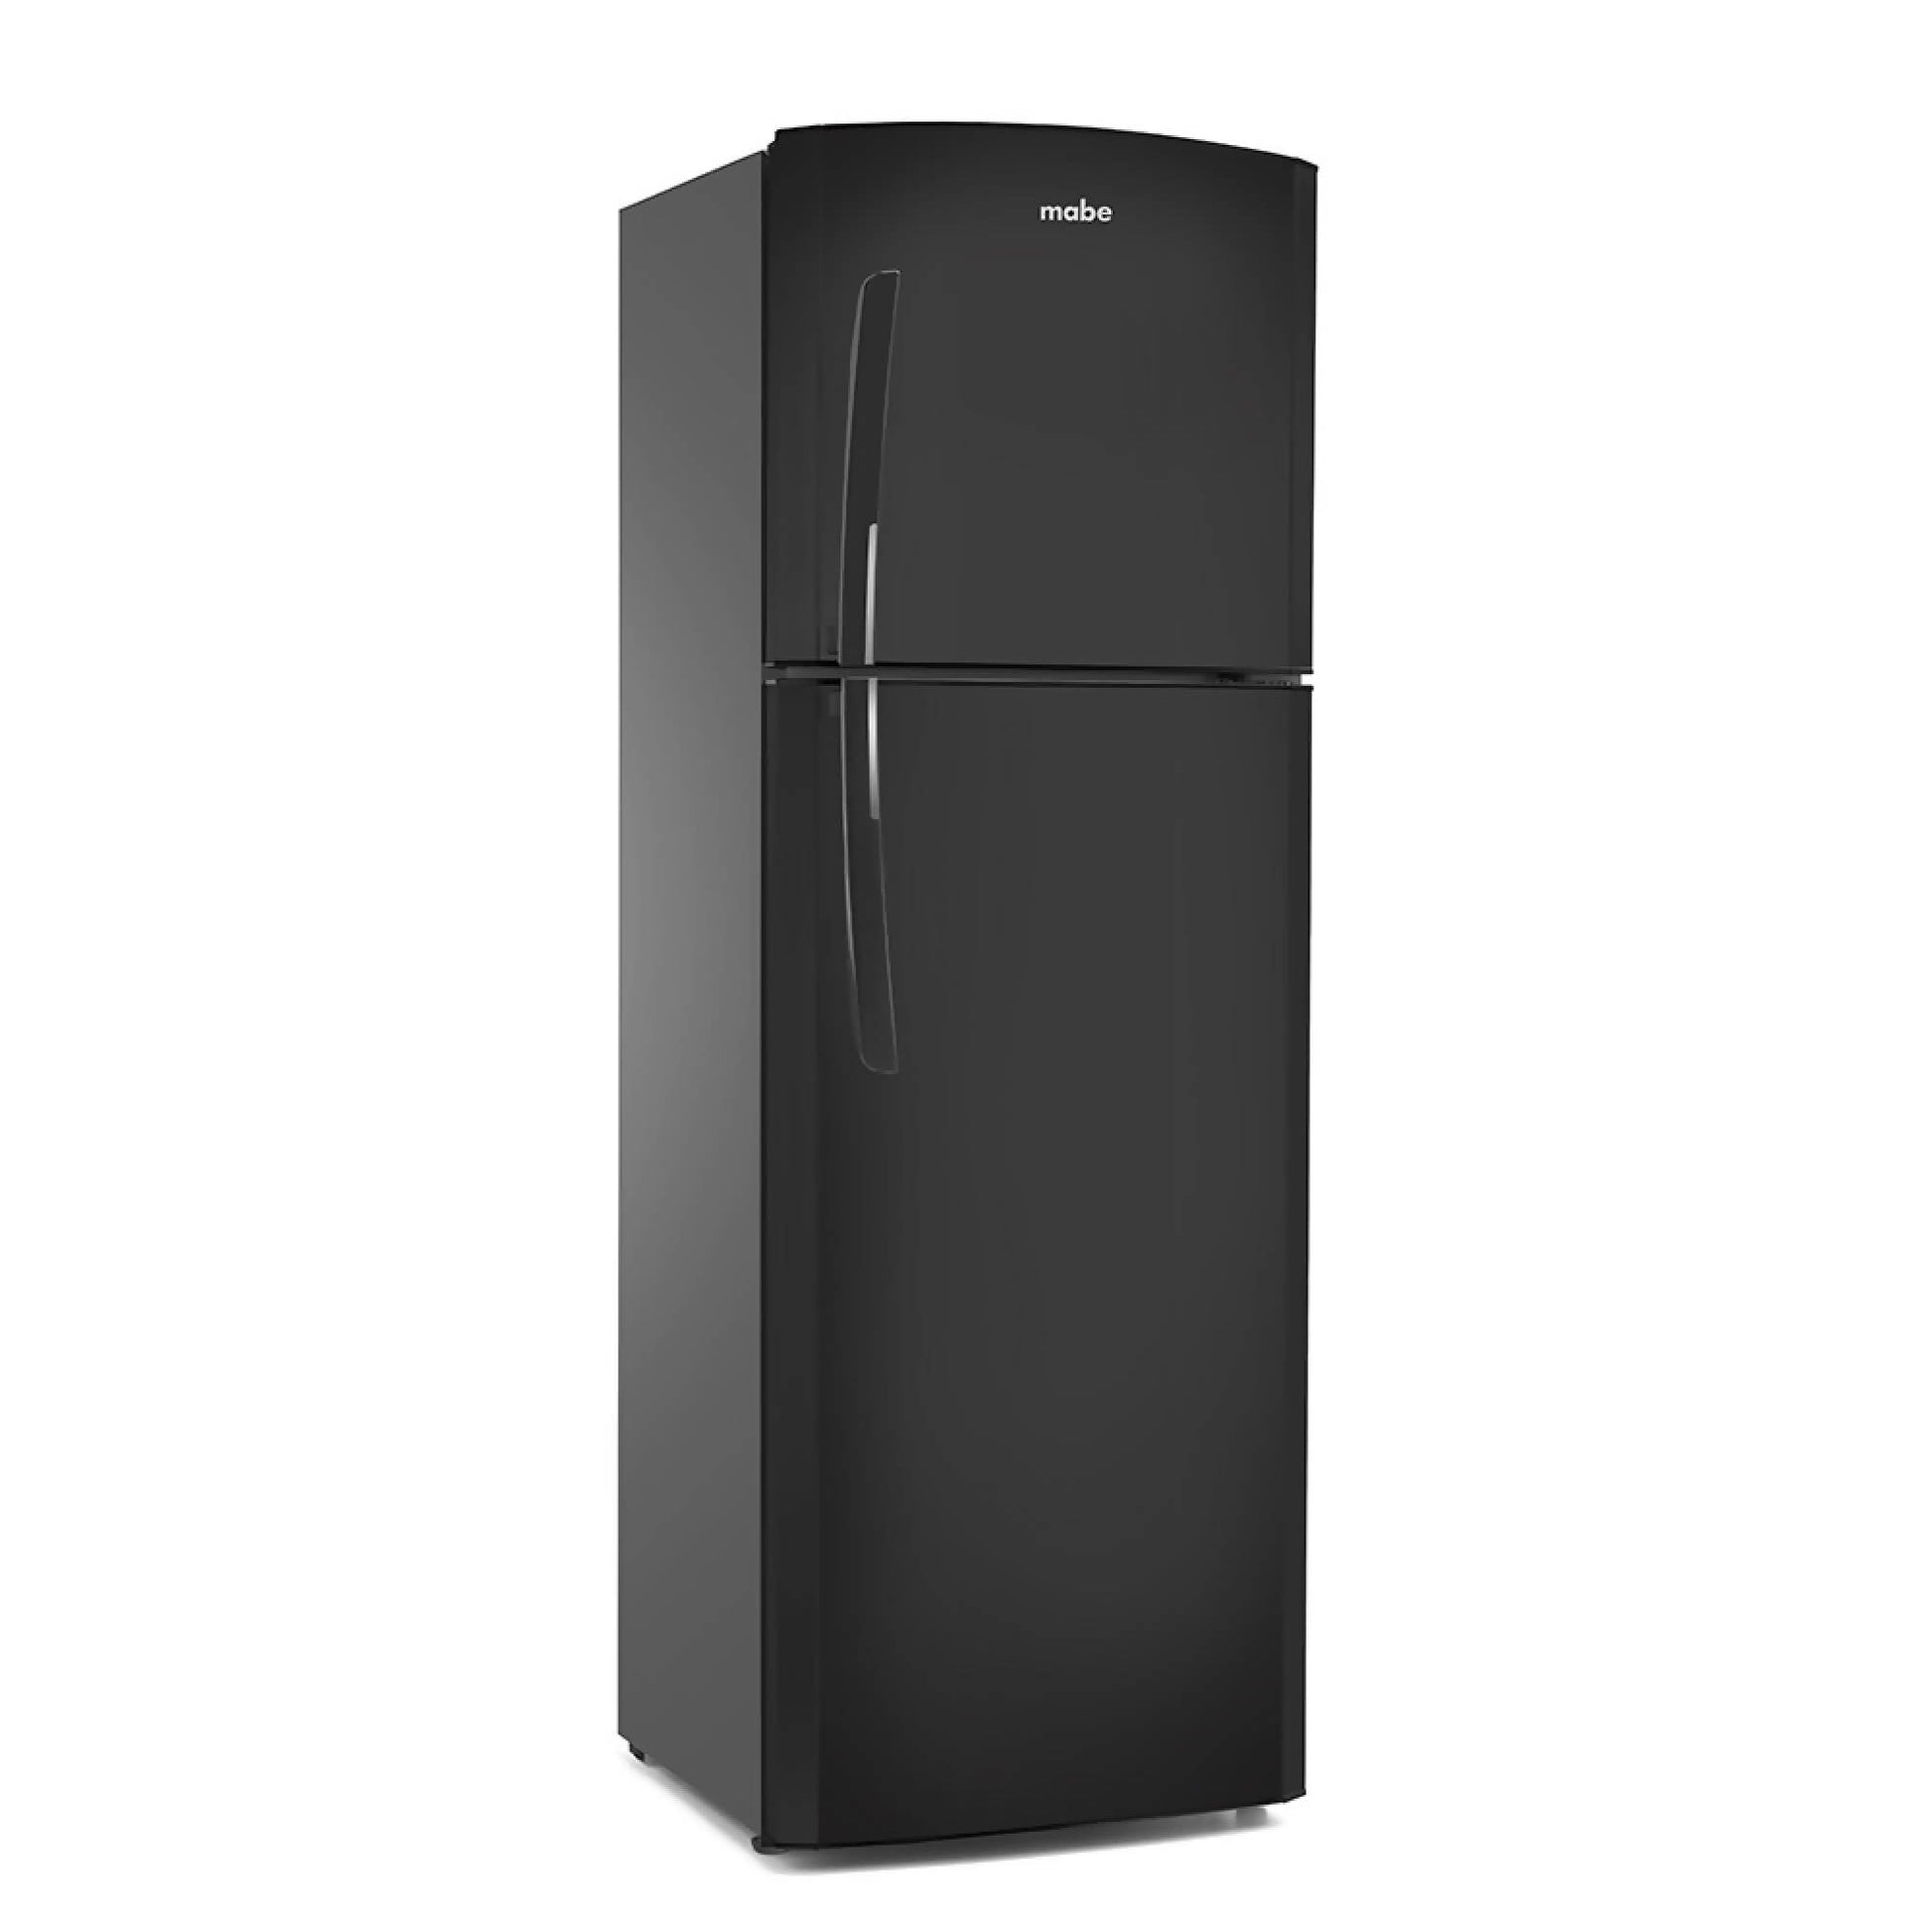 Refrigerador Top Freezer RMP400FHUG1 400 Lts Mabe3#Gris